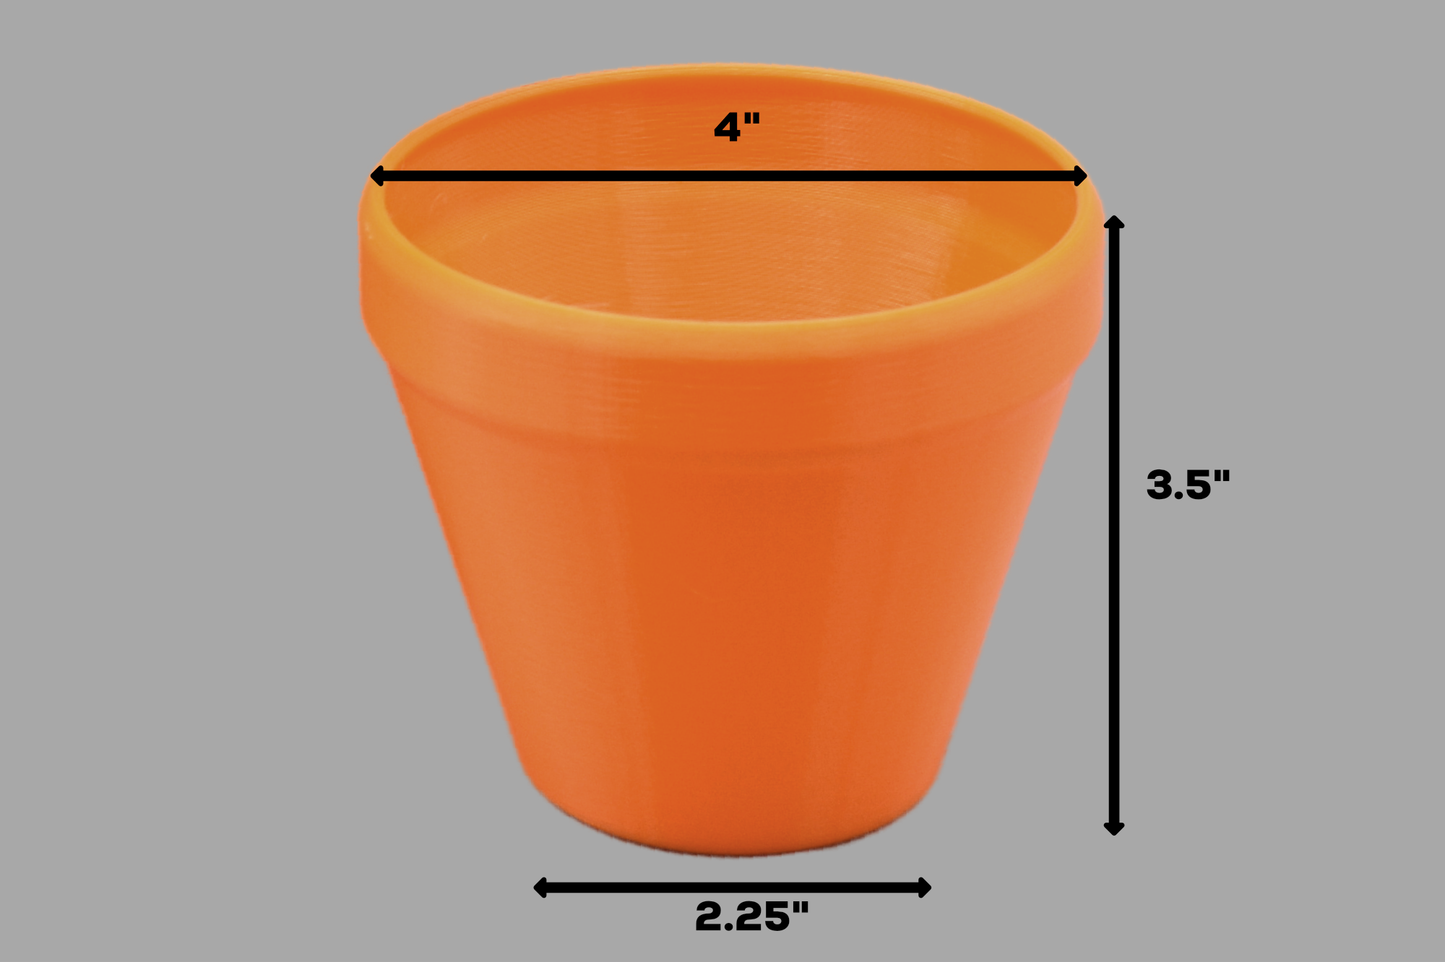 4-inch Colorful Outdoor-Safe Flower Pot, Optional Saucer